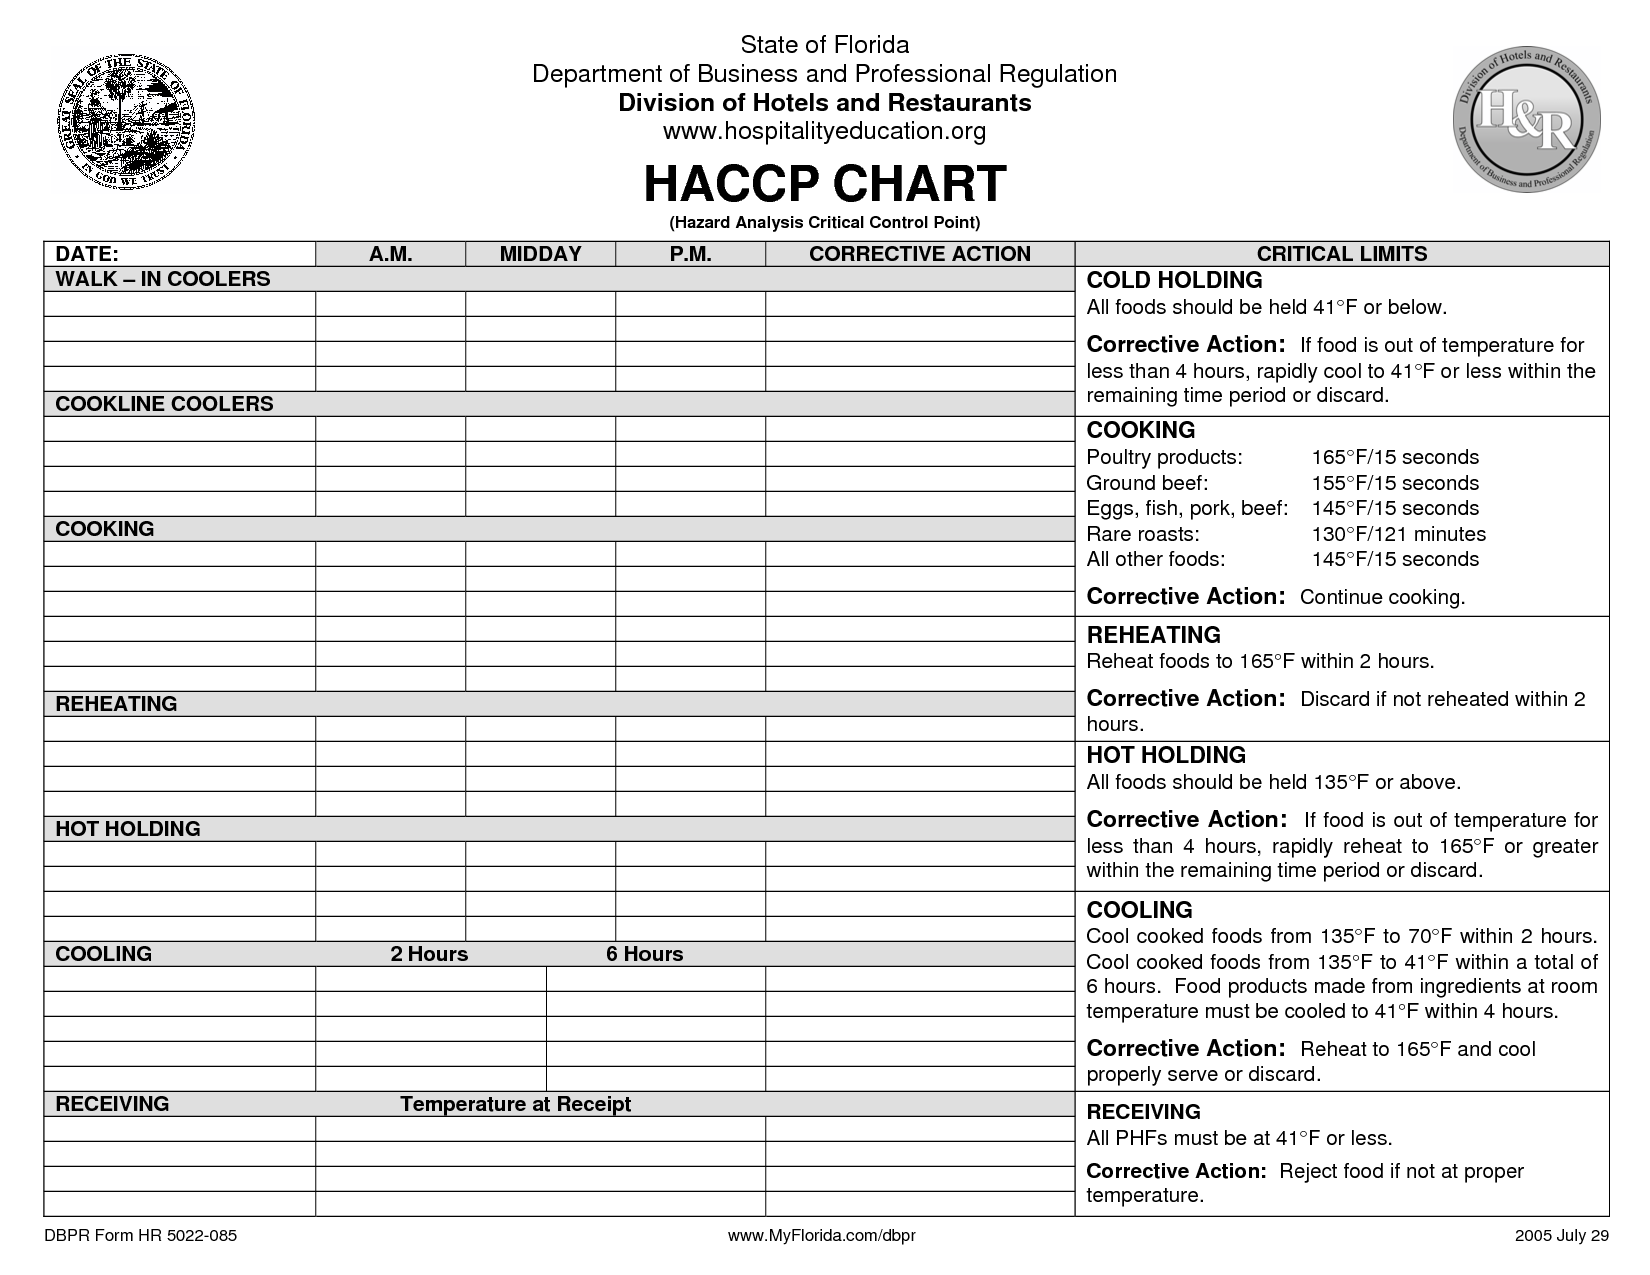 Food HACCP Plan Example Image